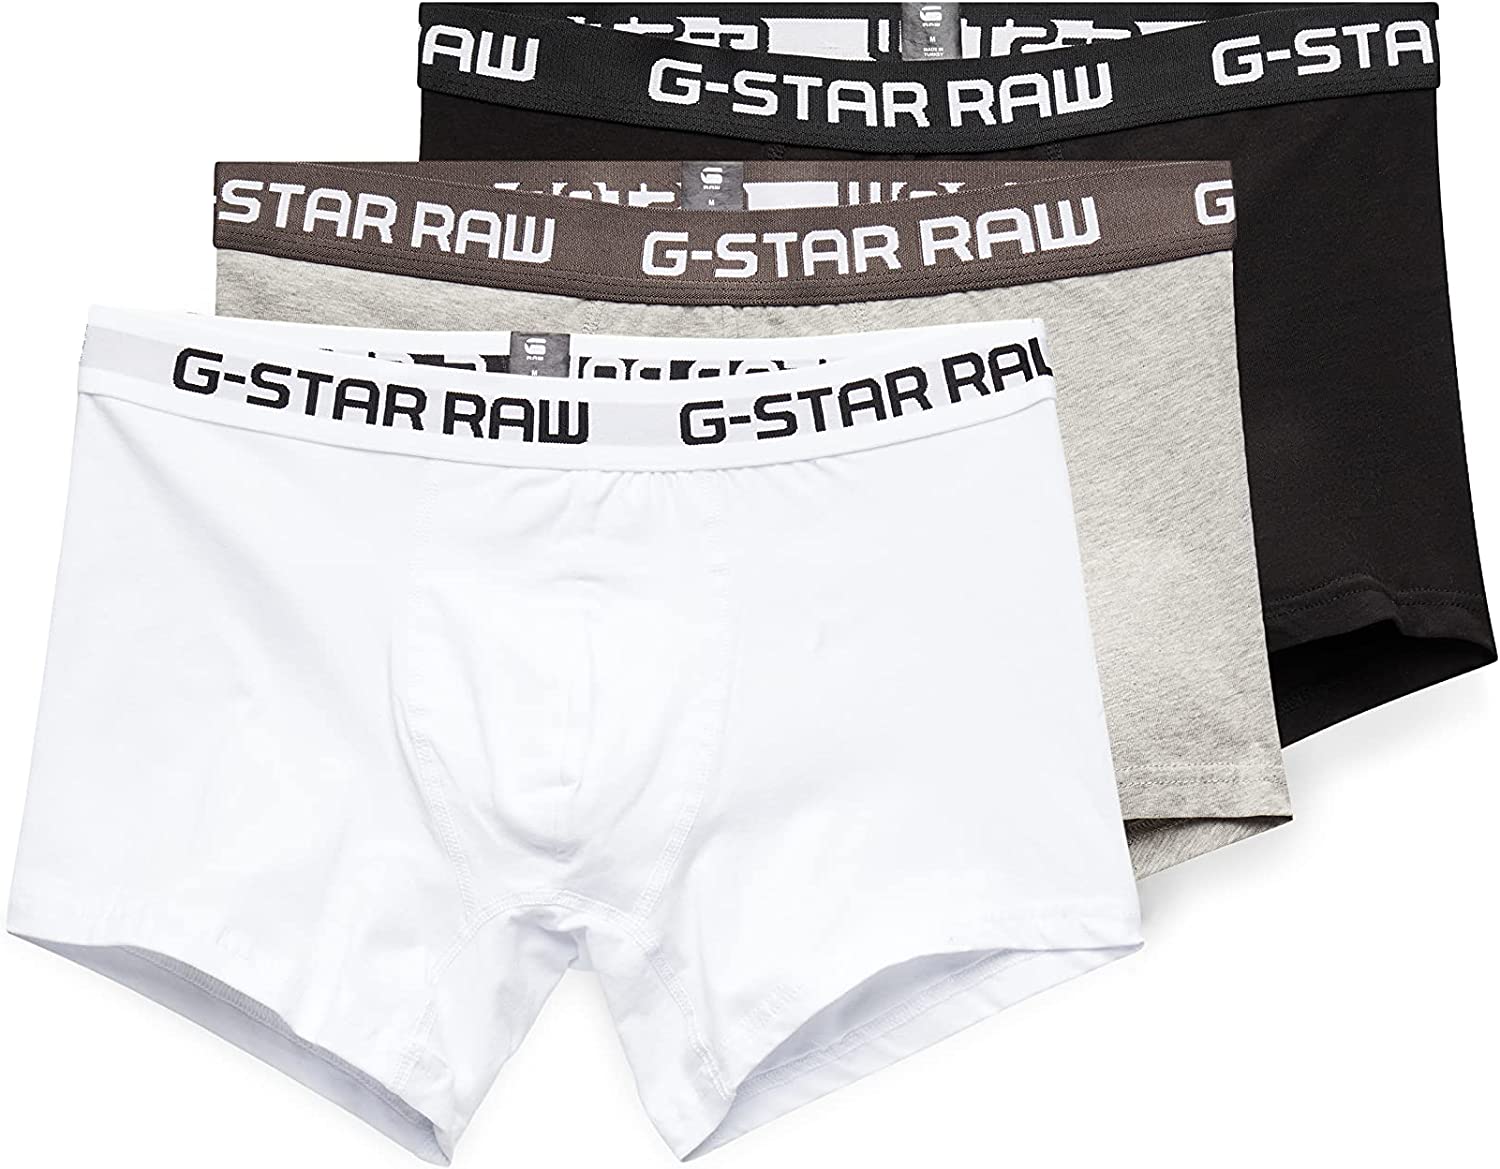 G-Star Raw Men's Classic Trunk 3 Pack | eBay